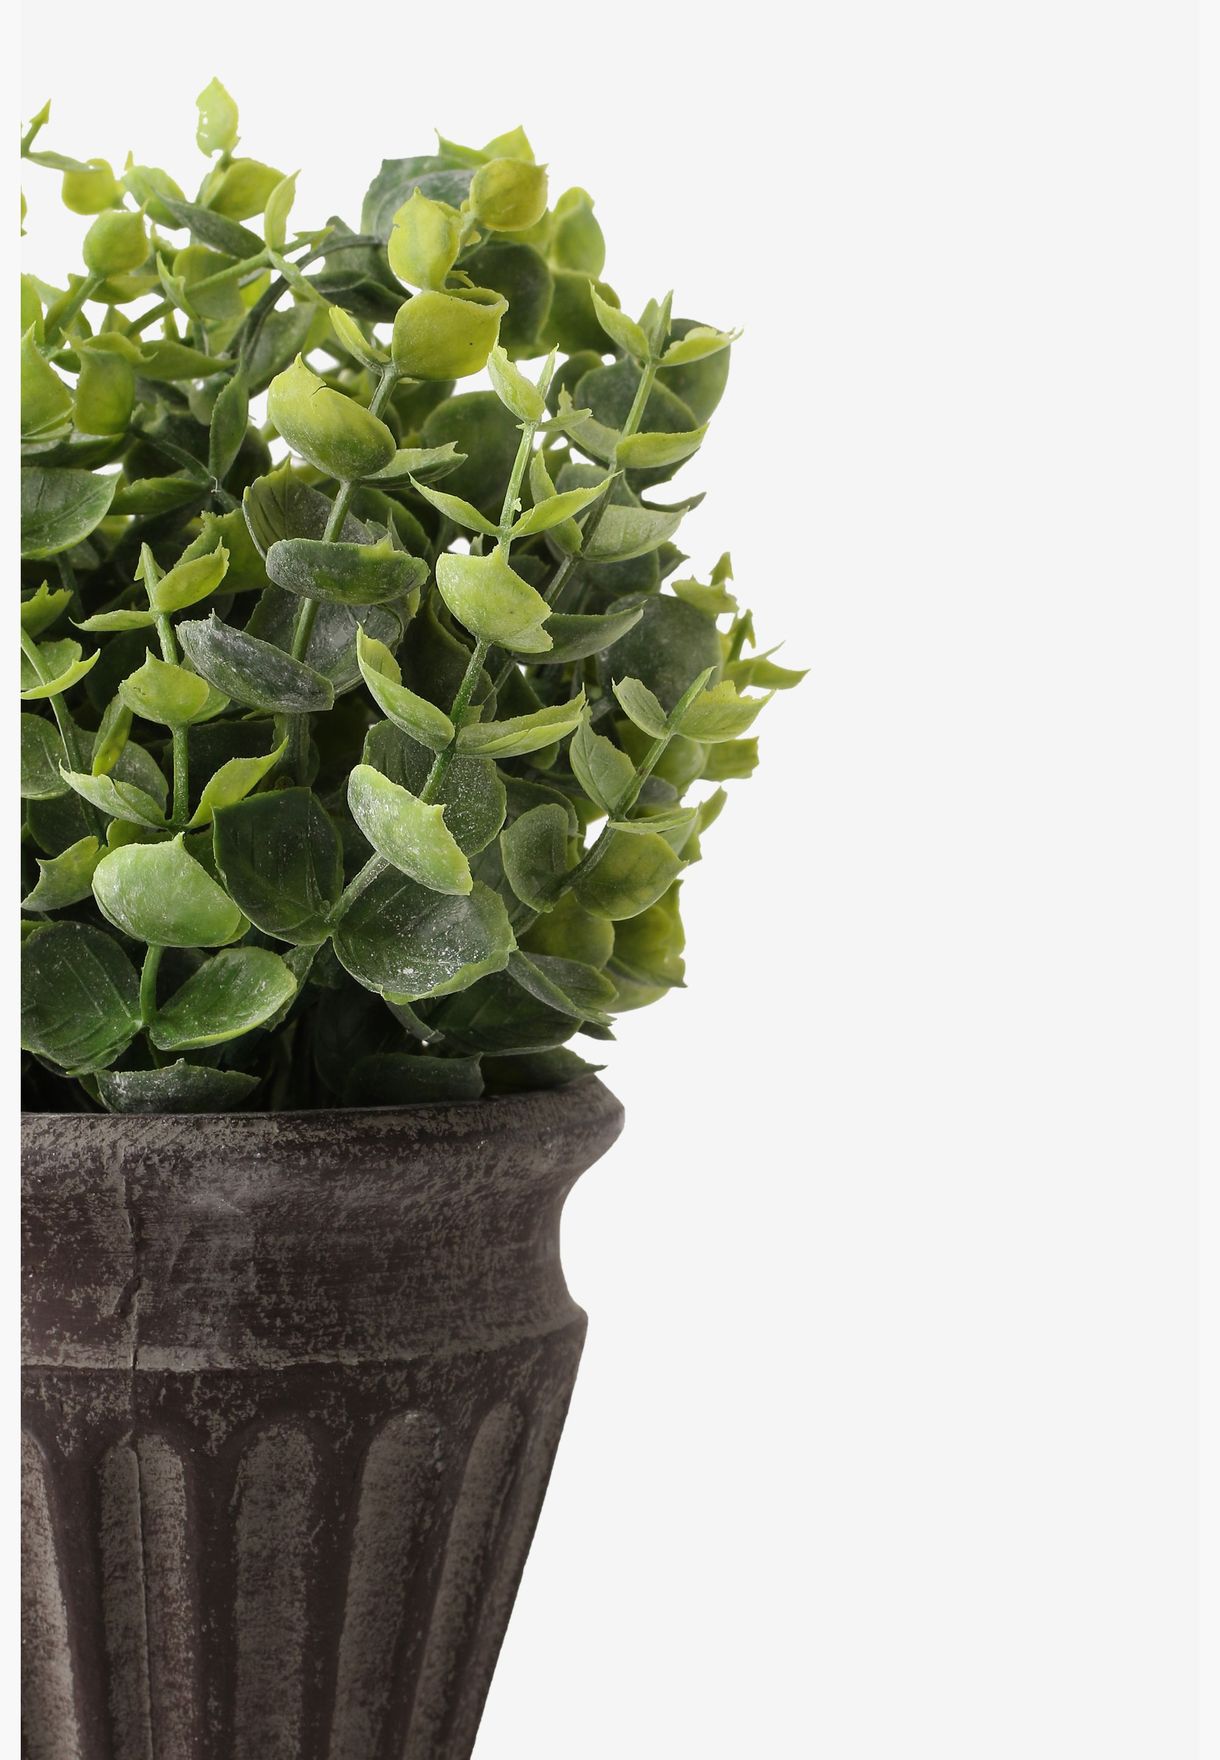 Rustic Textured Medium Ceramic Pot With Artificial Foliage For Home Decor Indoor & Outdoor 